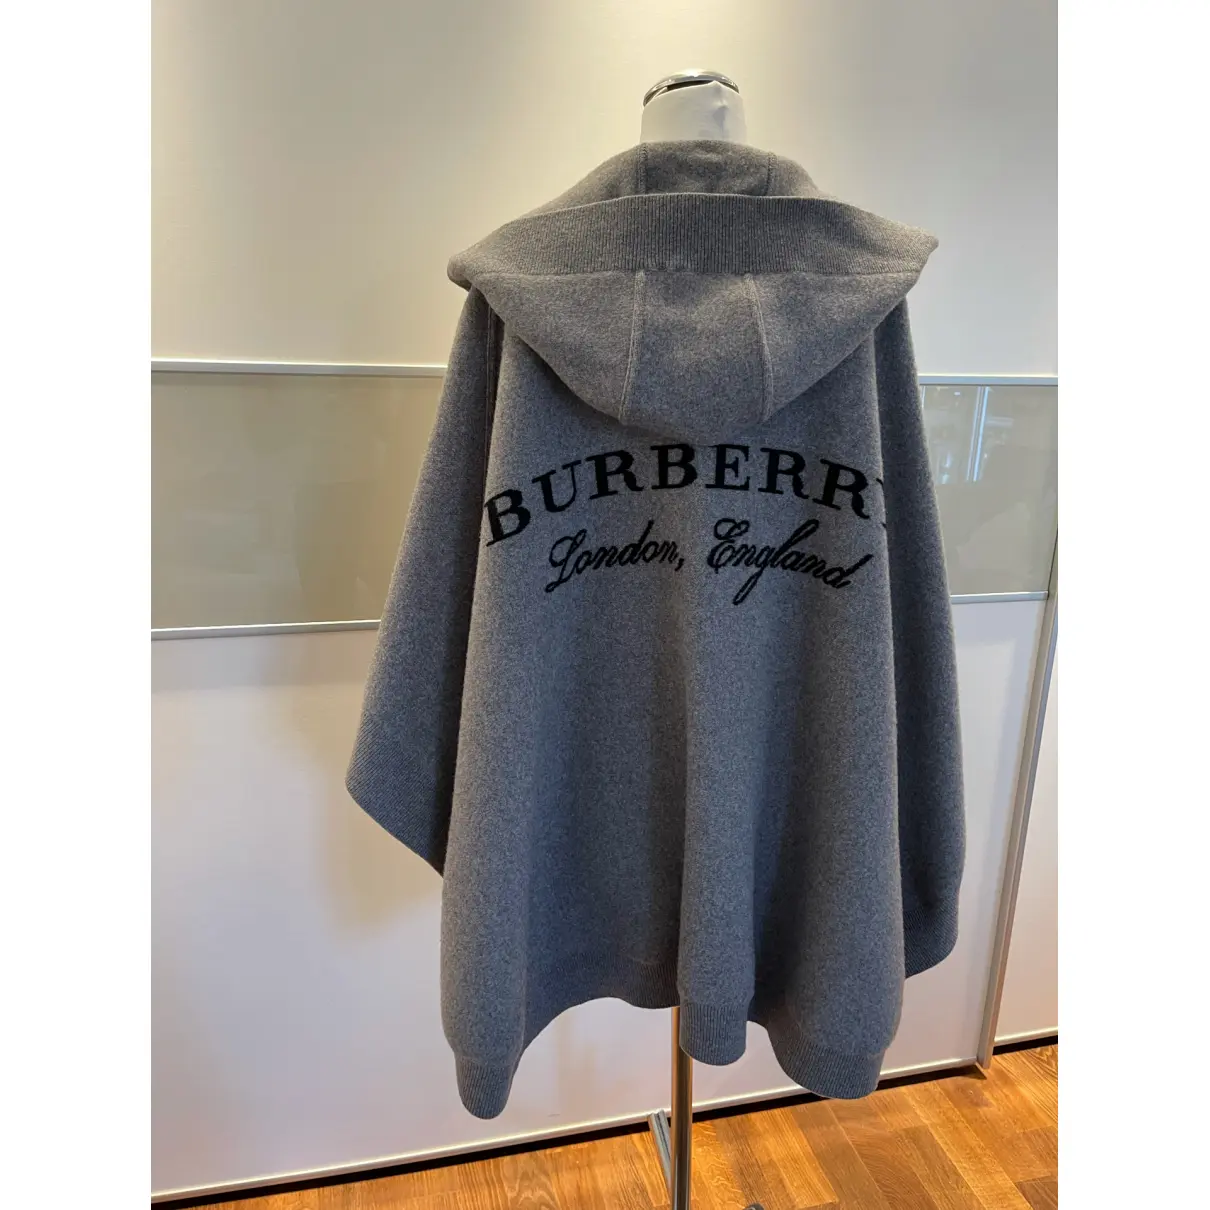 Buy Burberry Cashmere cape online